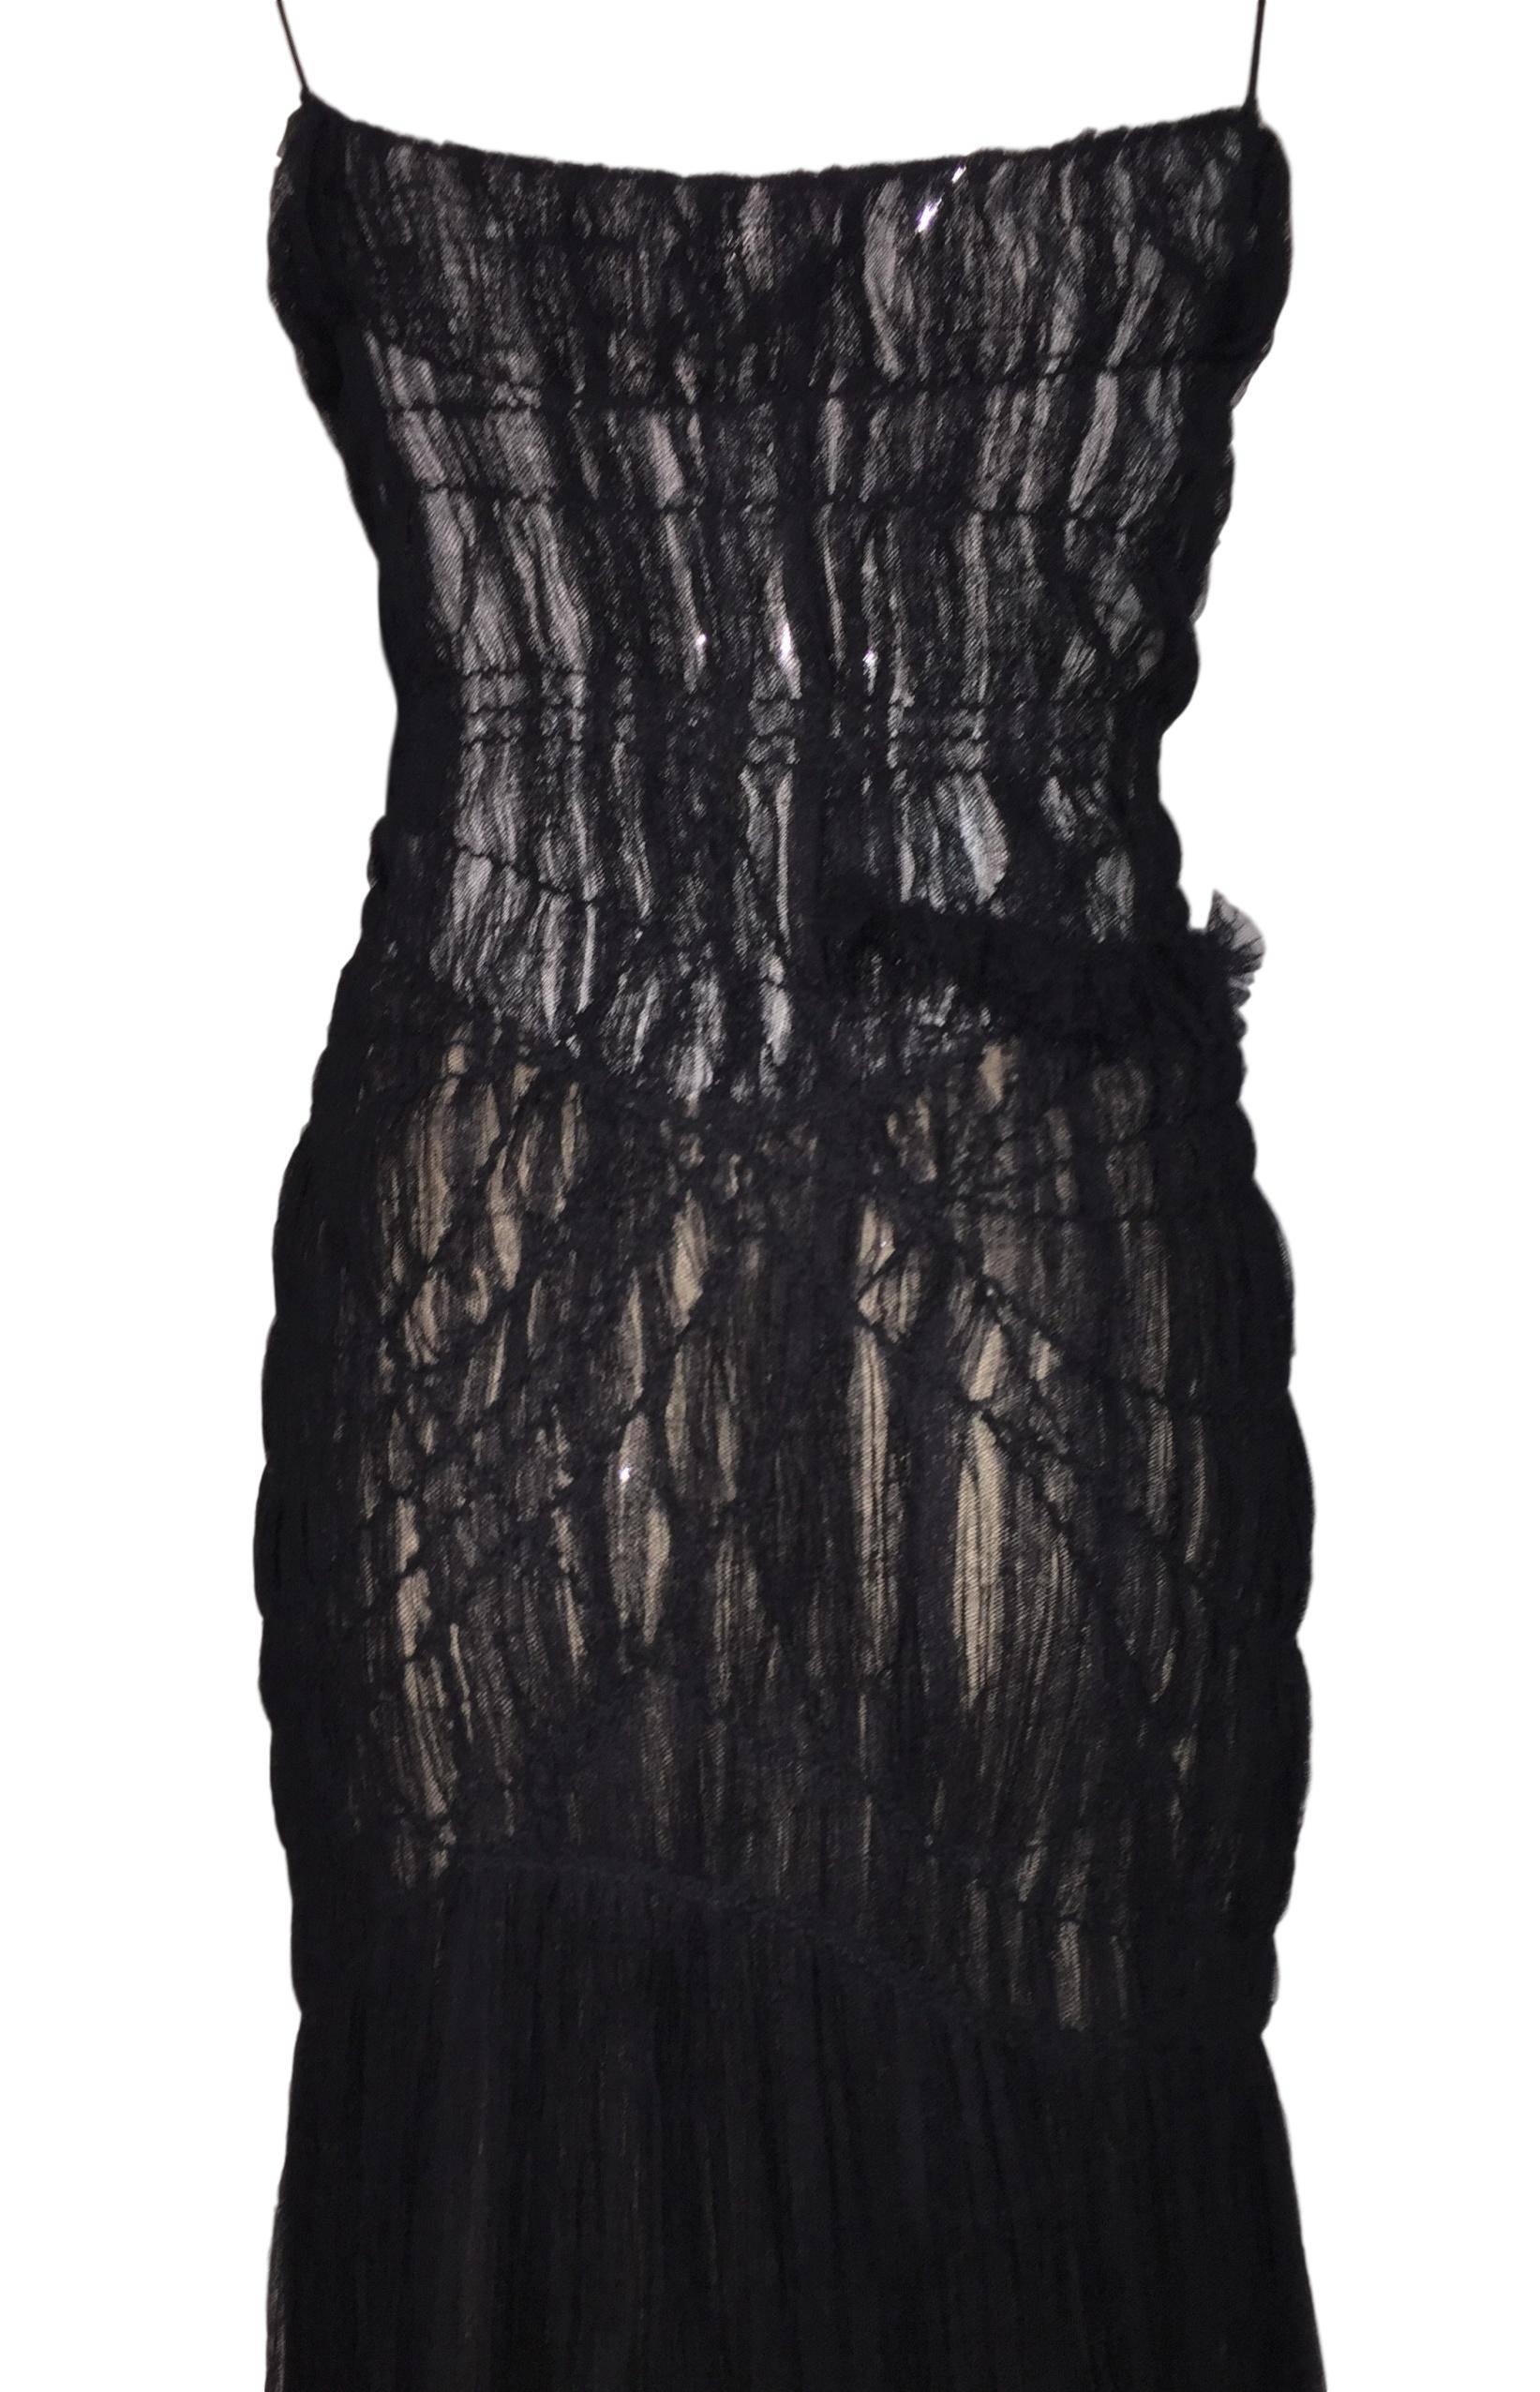 Women's Alexander McQueen Sheer Black Mesh Tulle Mermaid Gown Dress, S / S 2004 